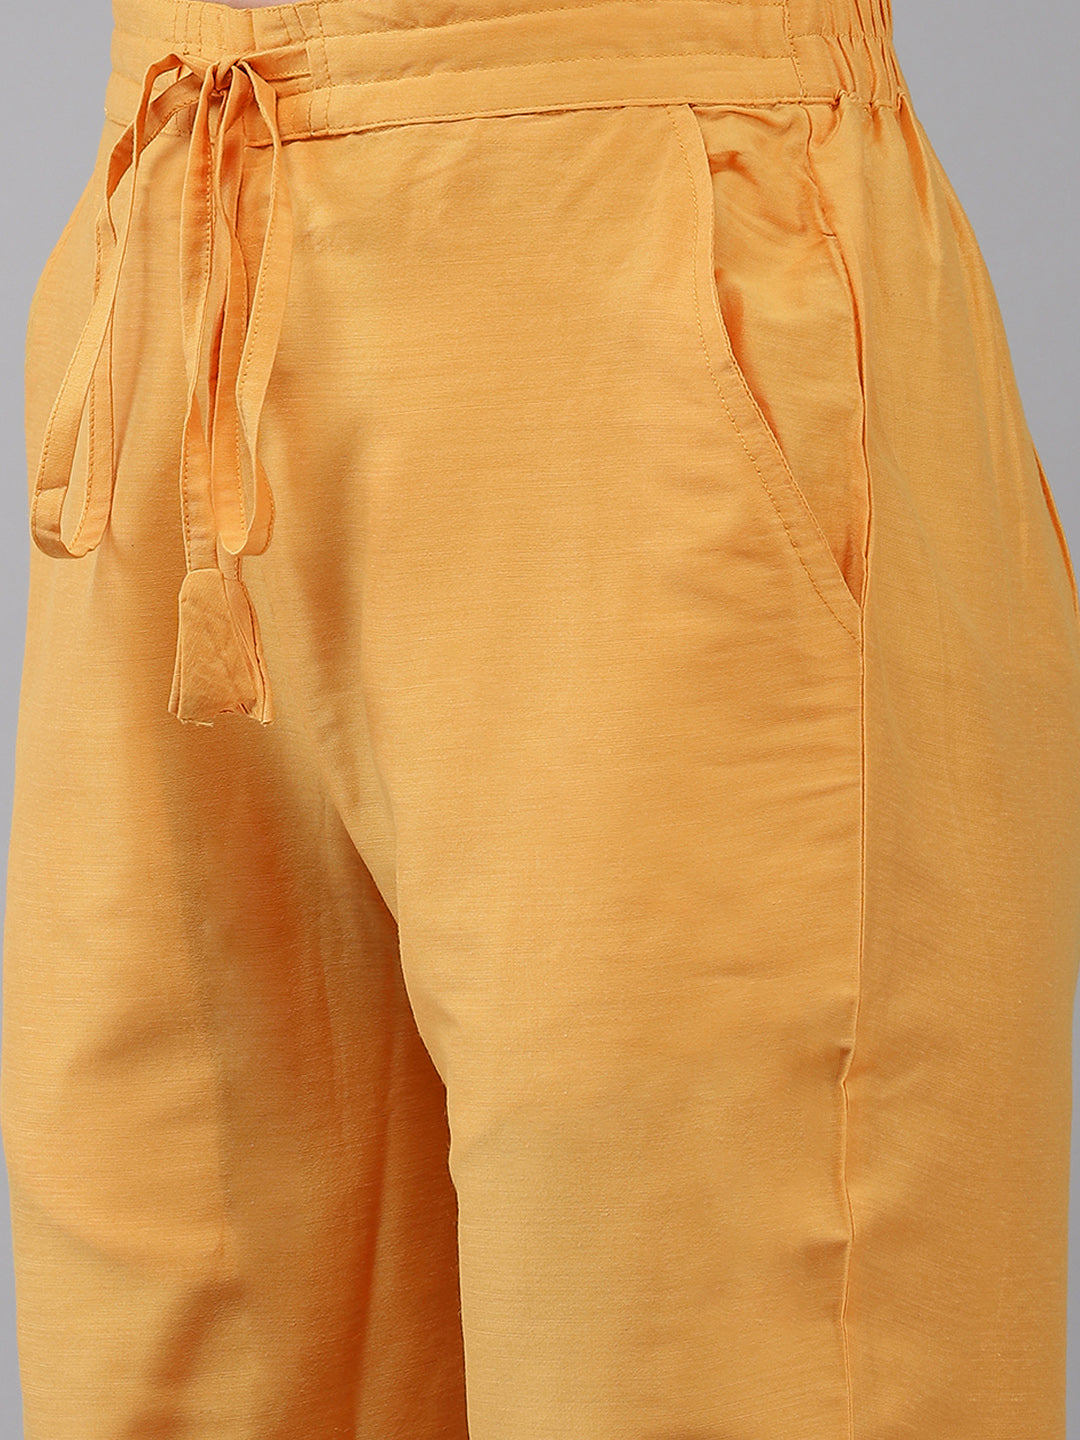 Ishin Women's Yellow Embroidered A-line Kurta with Trouser & Dupatta